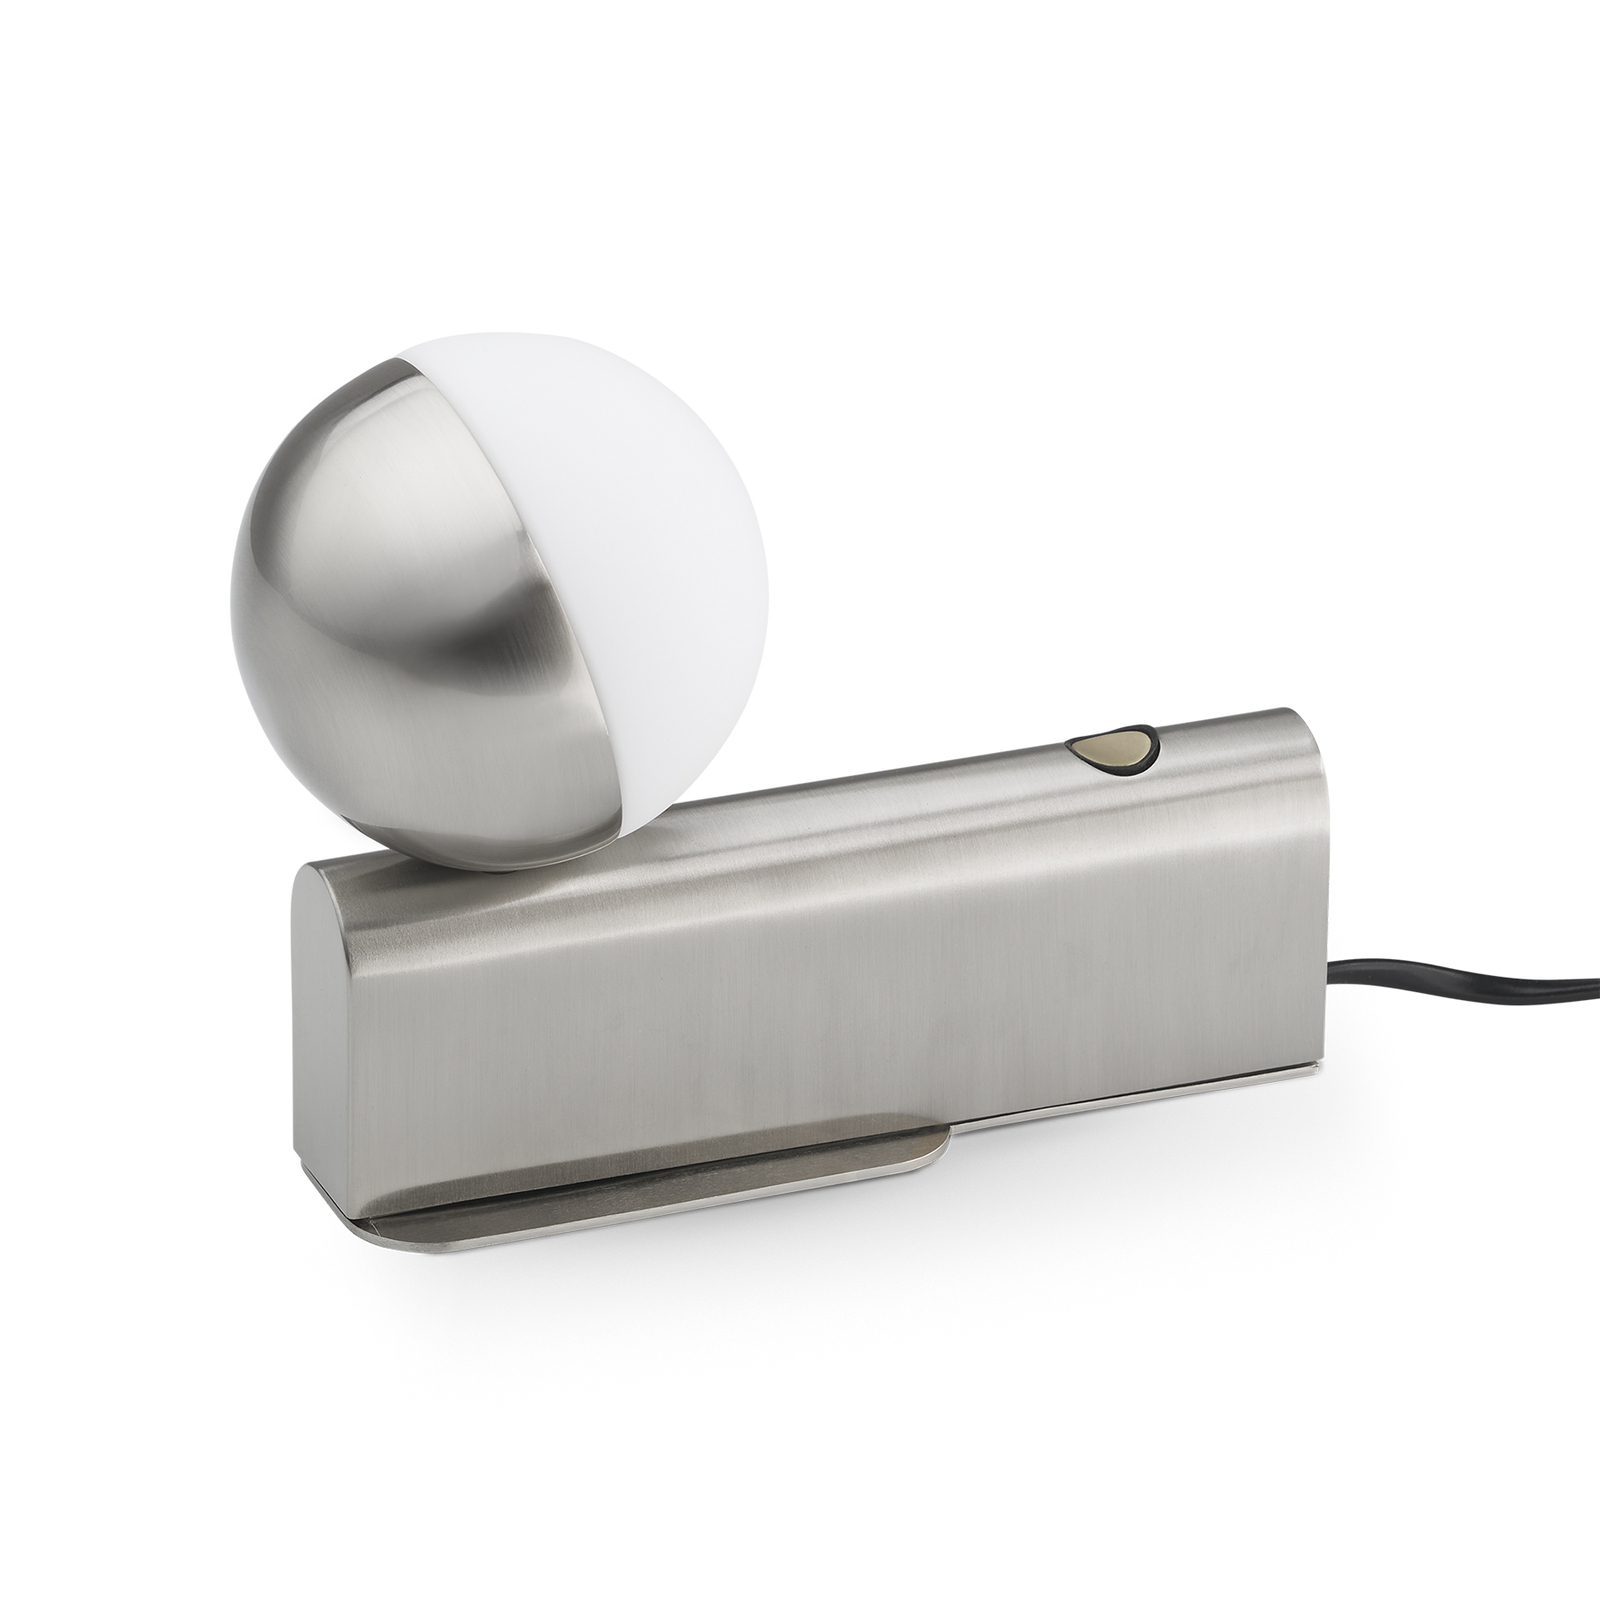 Northern Balancer mini light, UK plug, steel